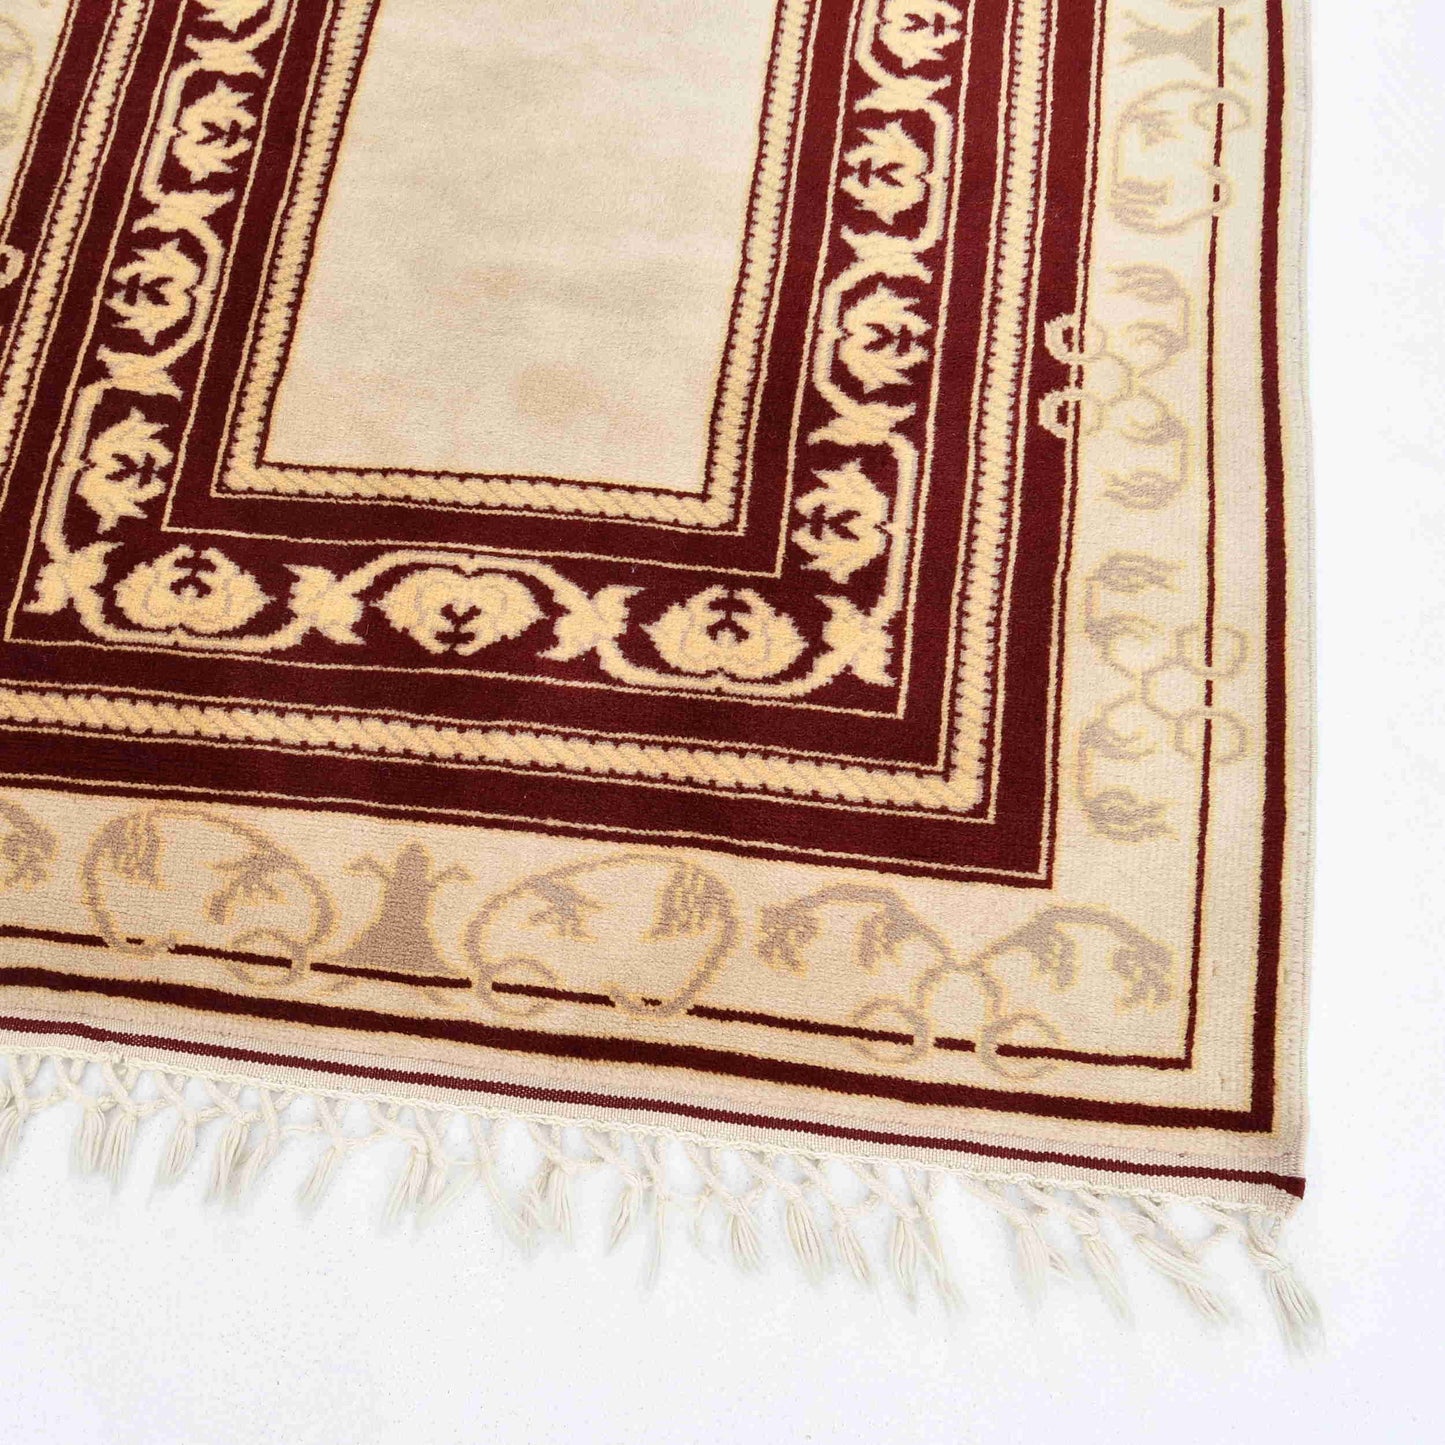 Oriental Rug Yoruk Hand Knotted Wool On Wool 120 X 184 Cm - 4' X 6' 1'' Sand C007 ER01